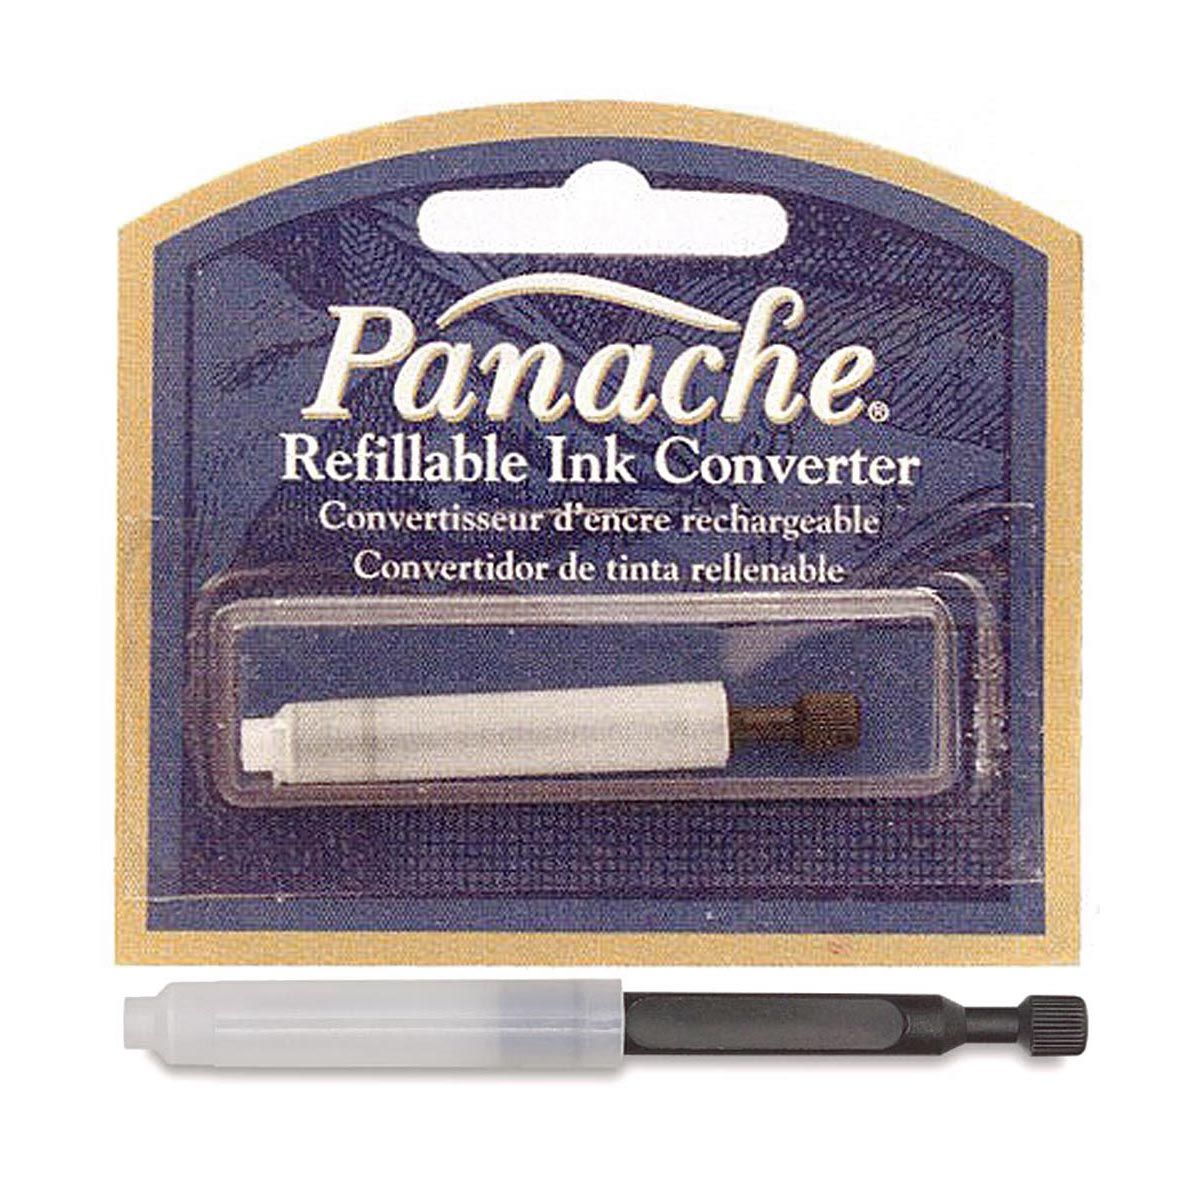 Panache Refillable Ink Converter